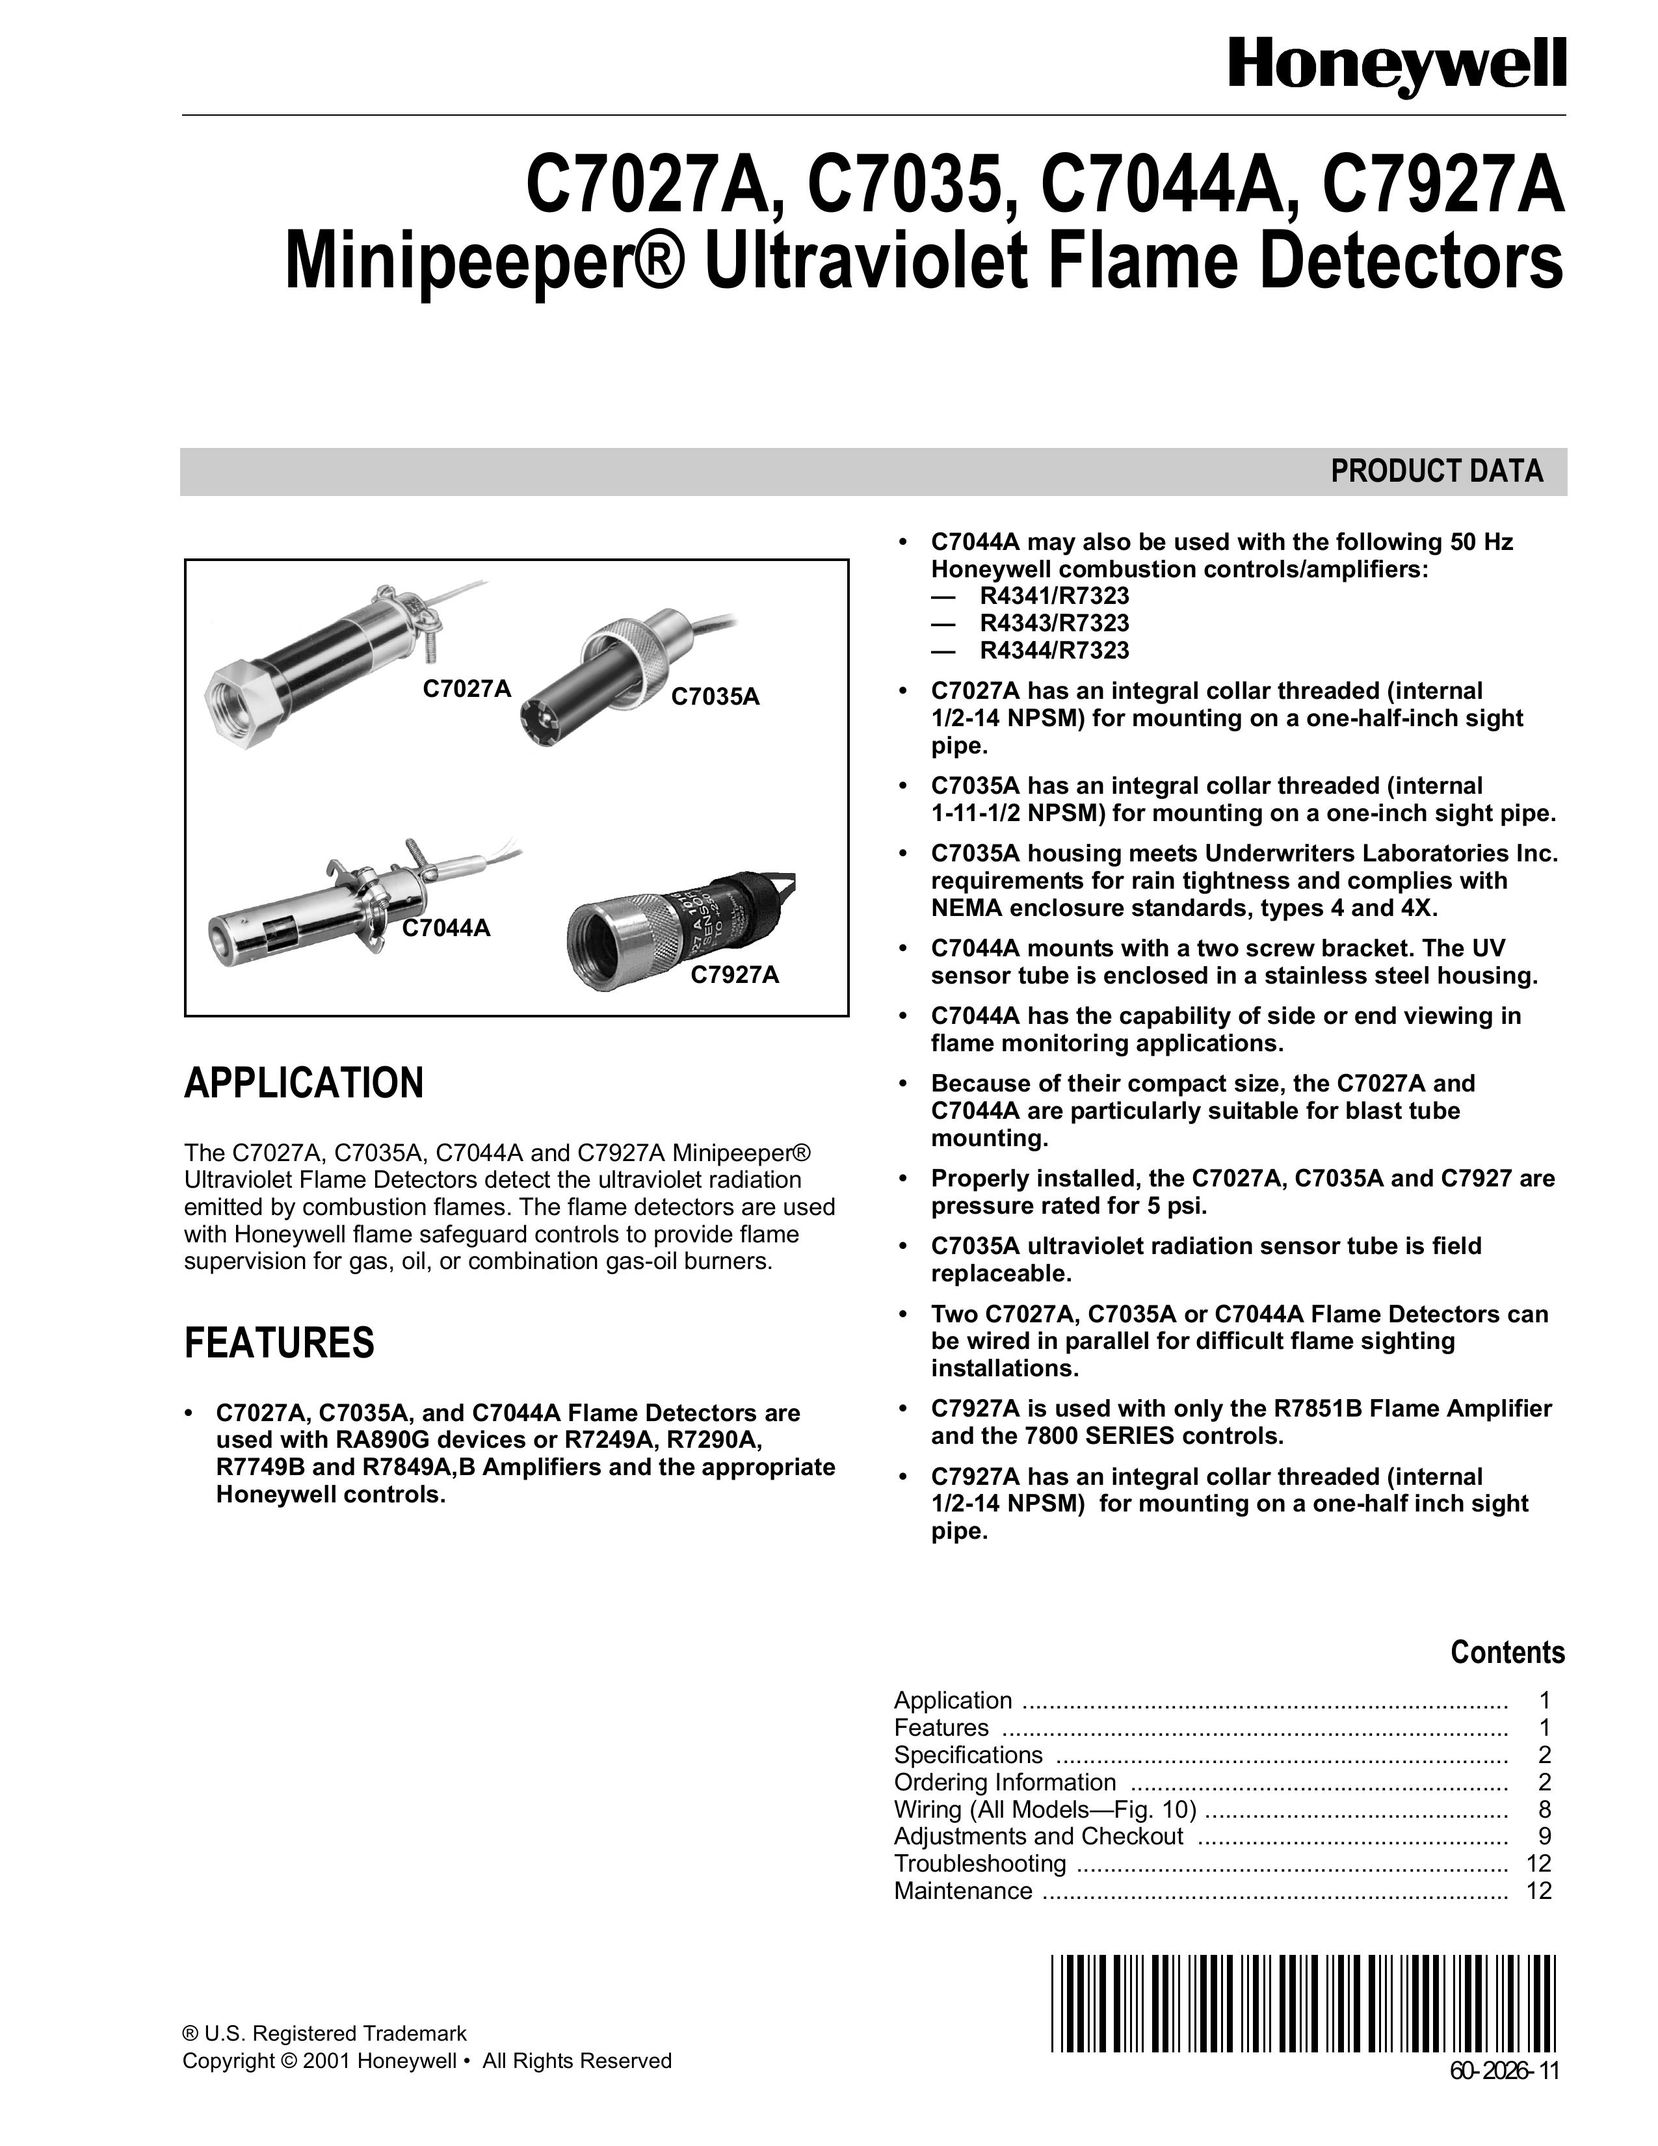 Honeywell C7035 Carbon Monoxide Alarm User Manual